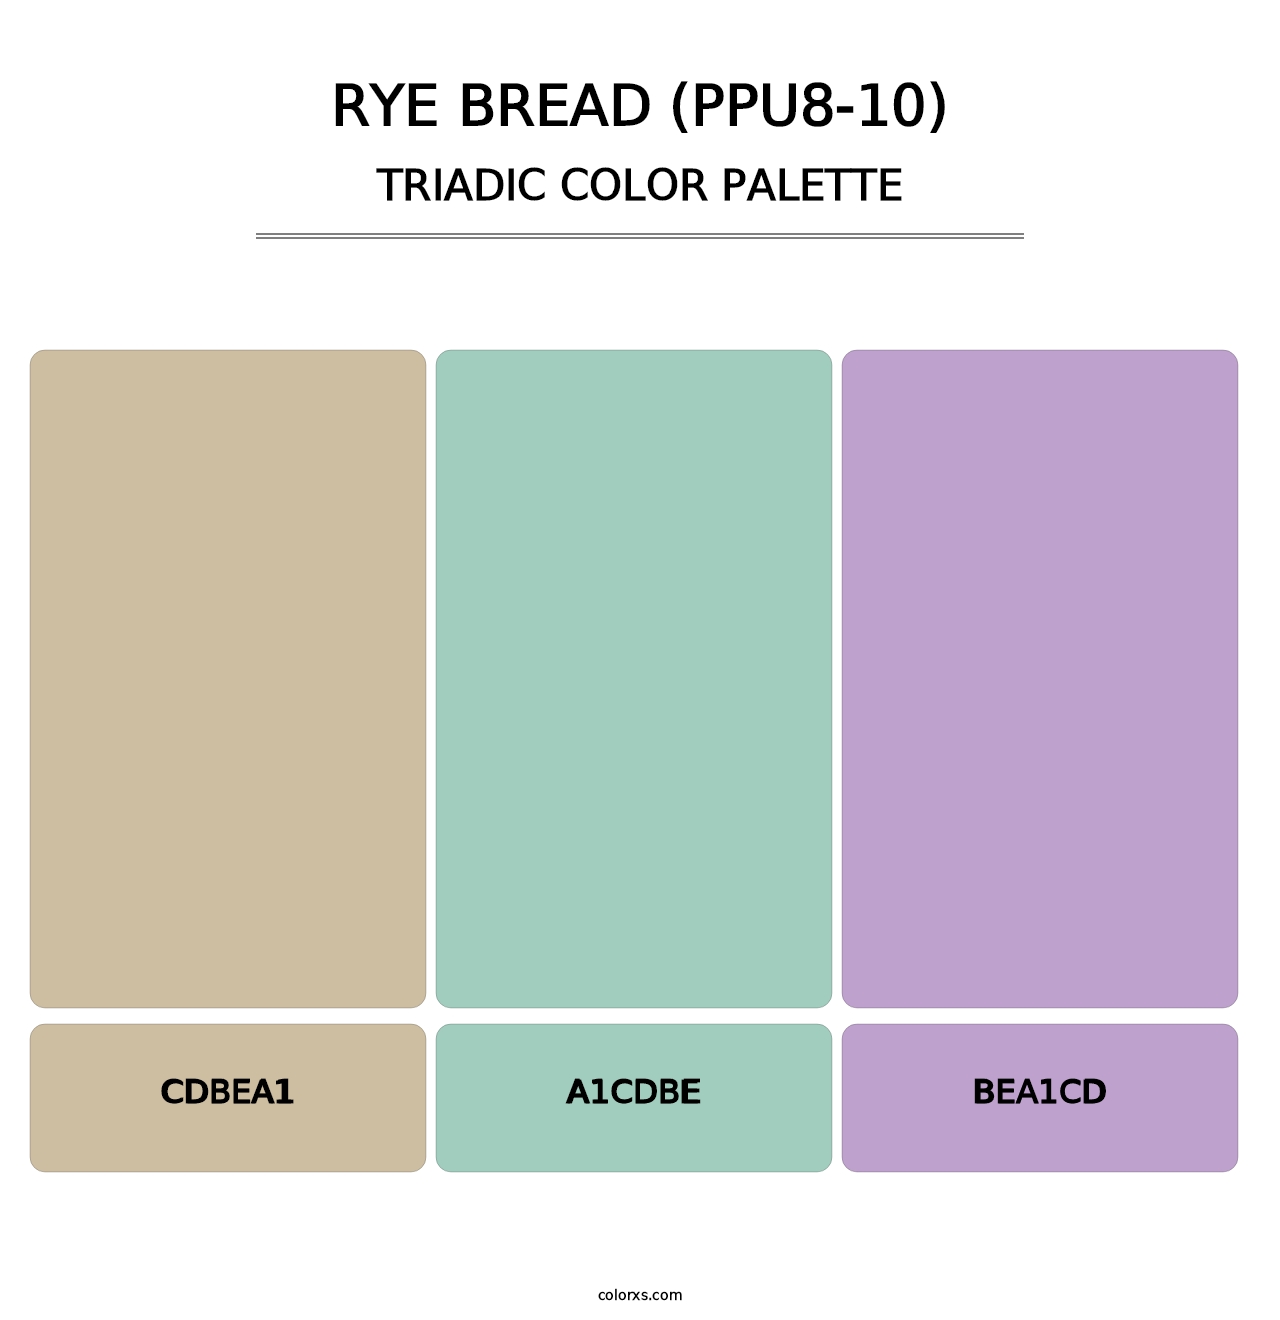 Rye Bread (PPU8-10) - Triadic Color Palette